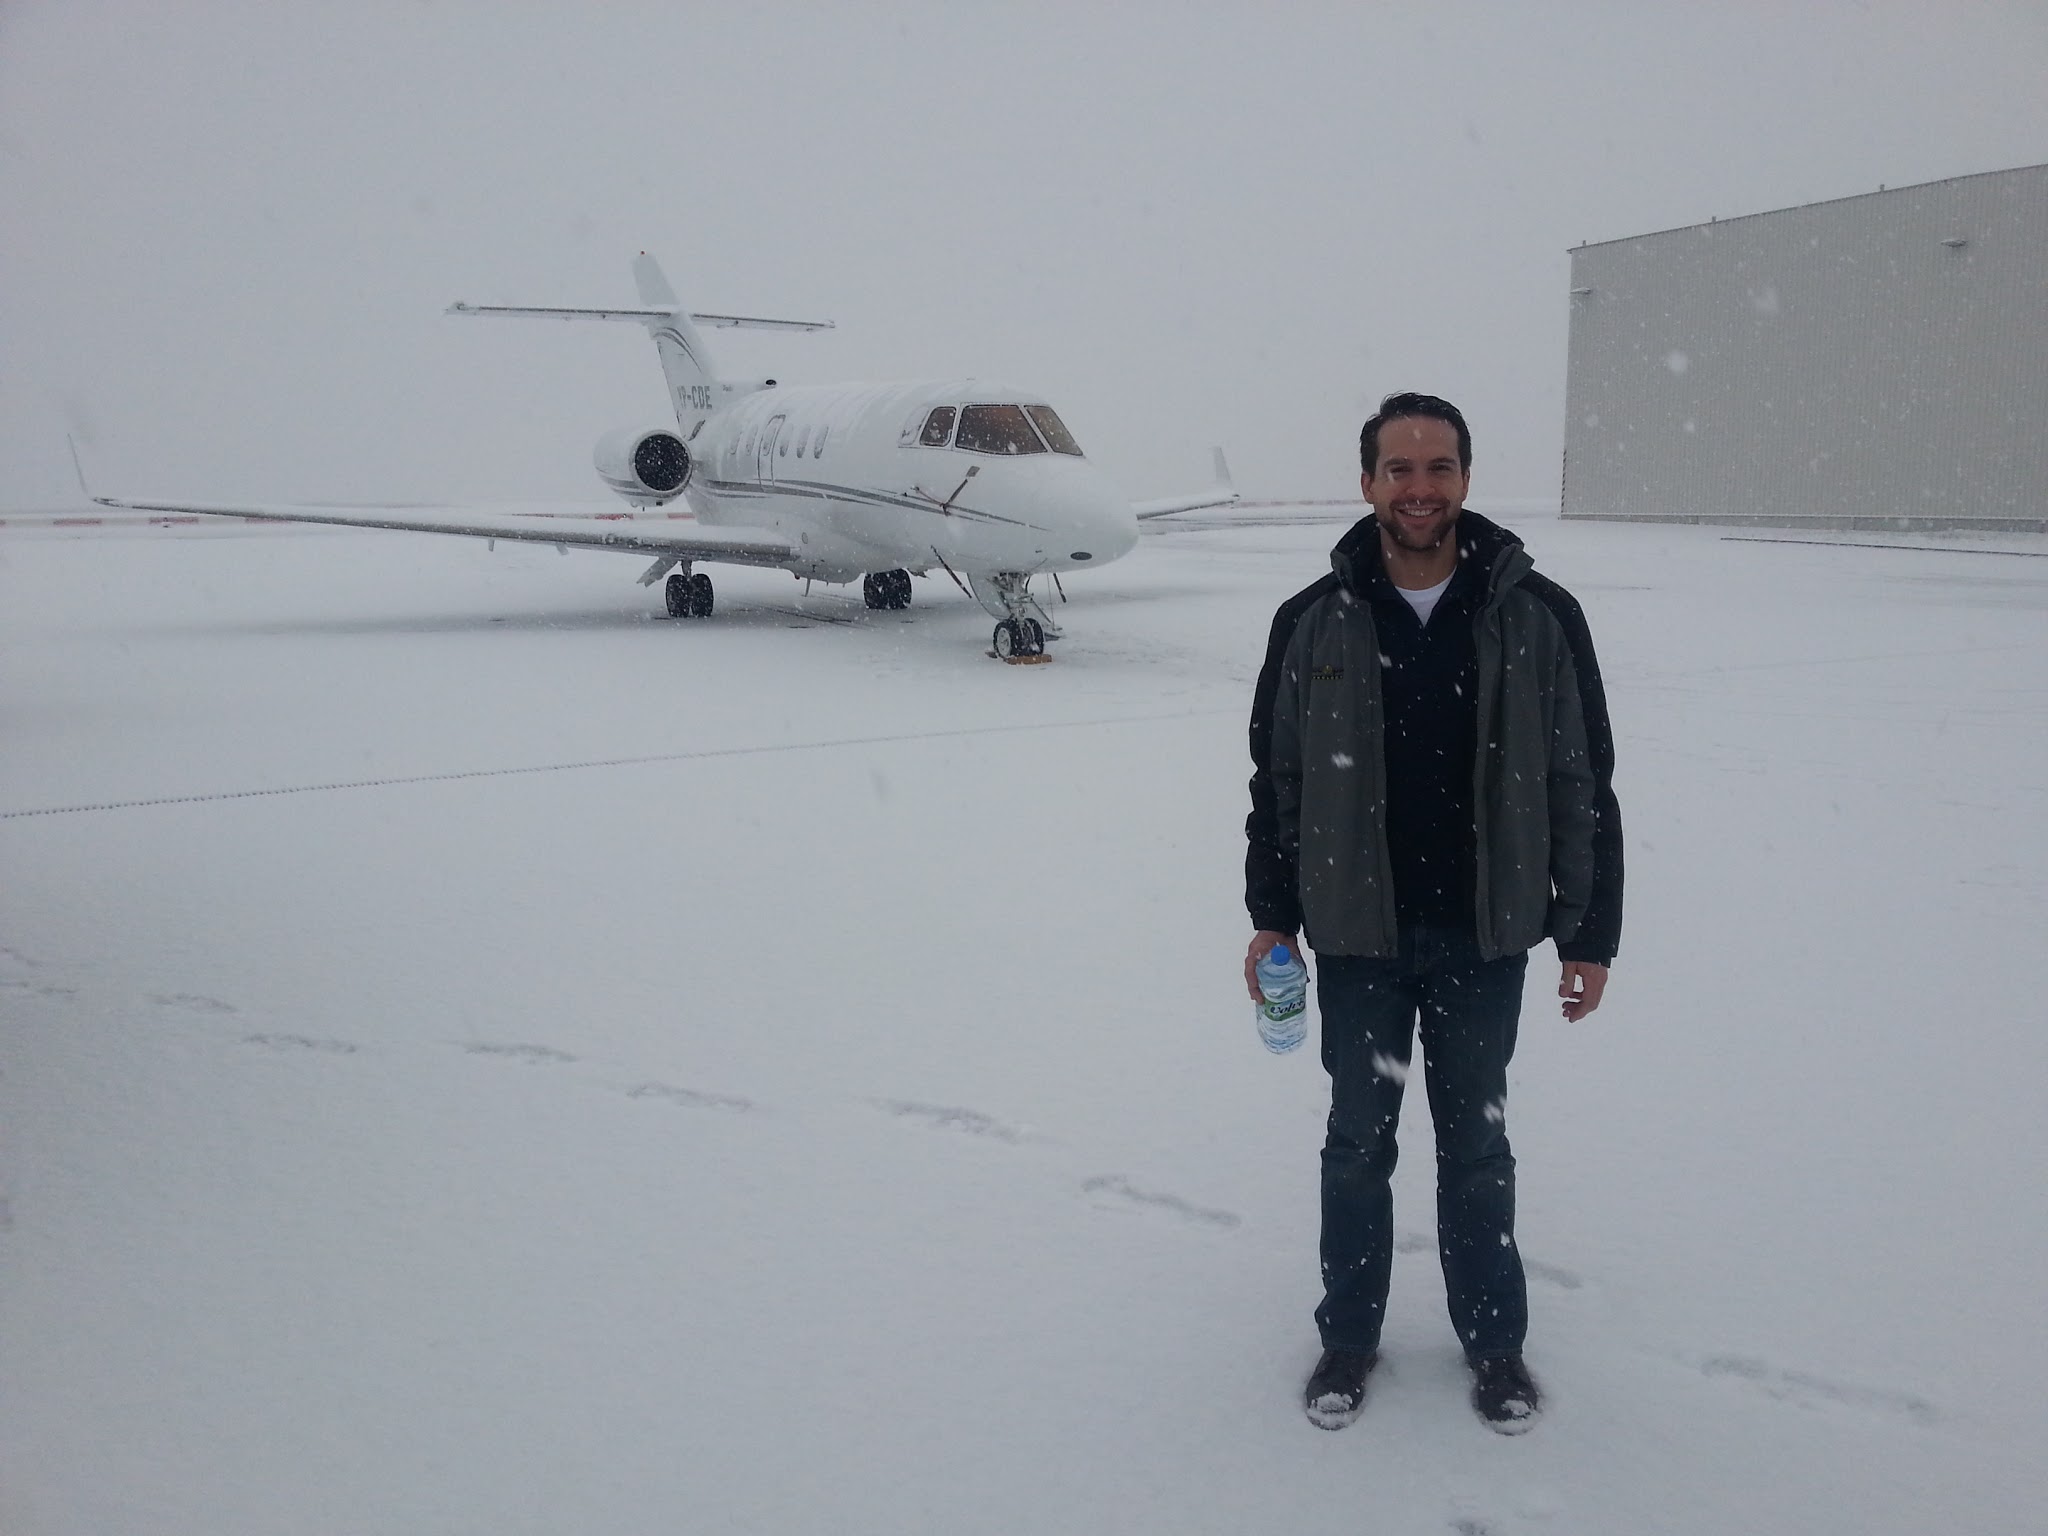 Snowy planes